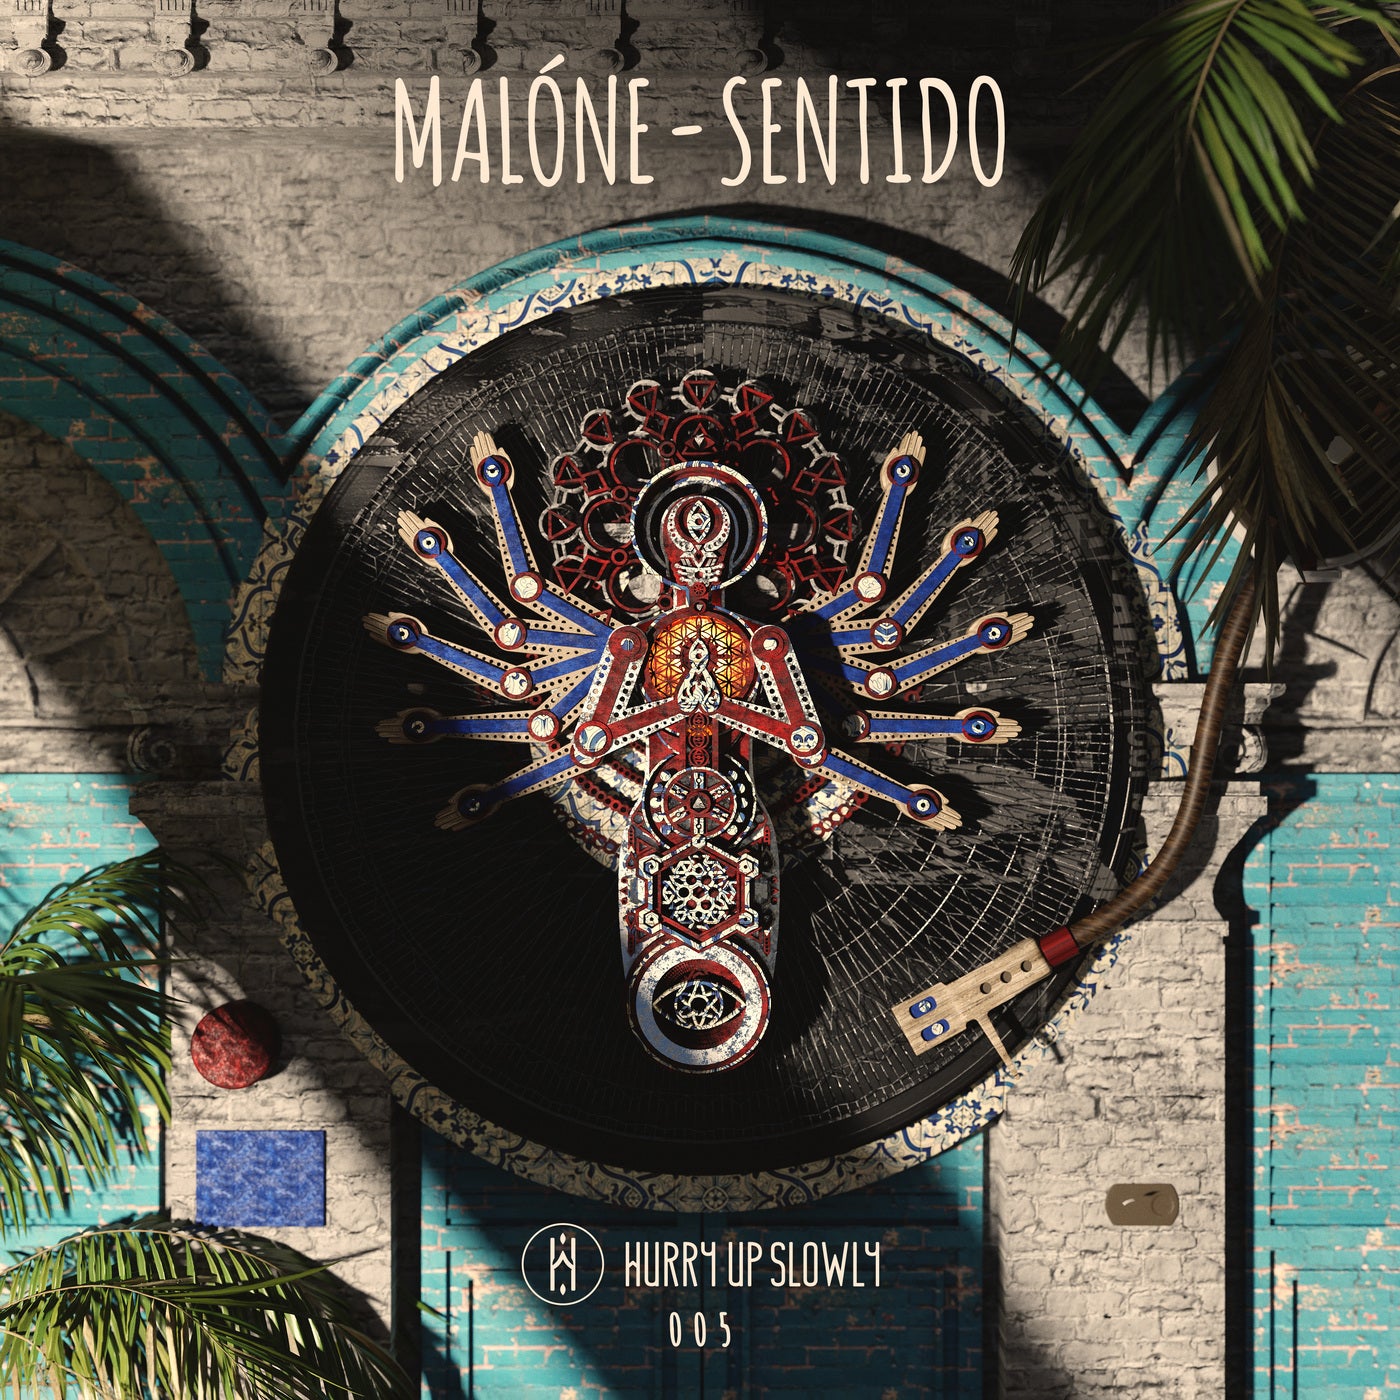 Malone - Sentido [Hurry Up Slowly] | Music & Downloads on Beatport